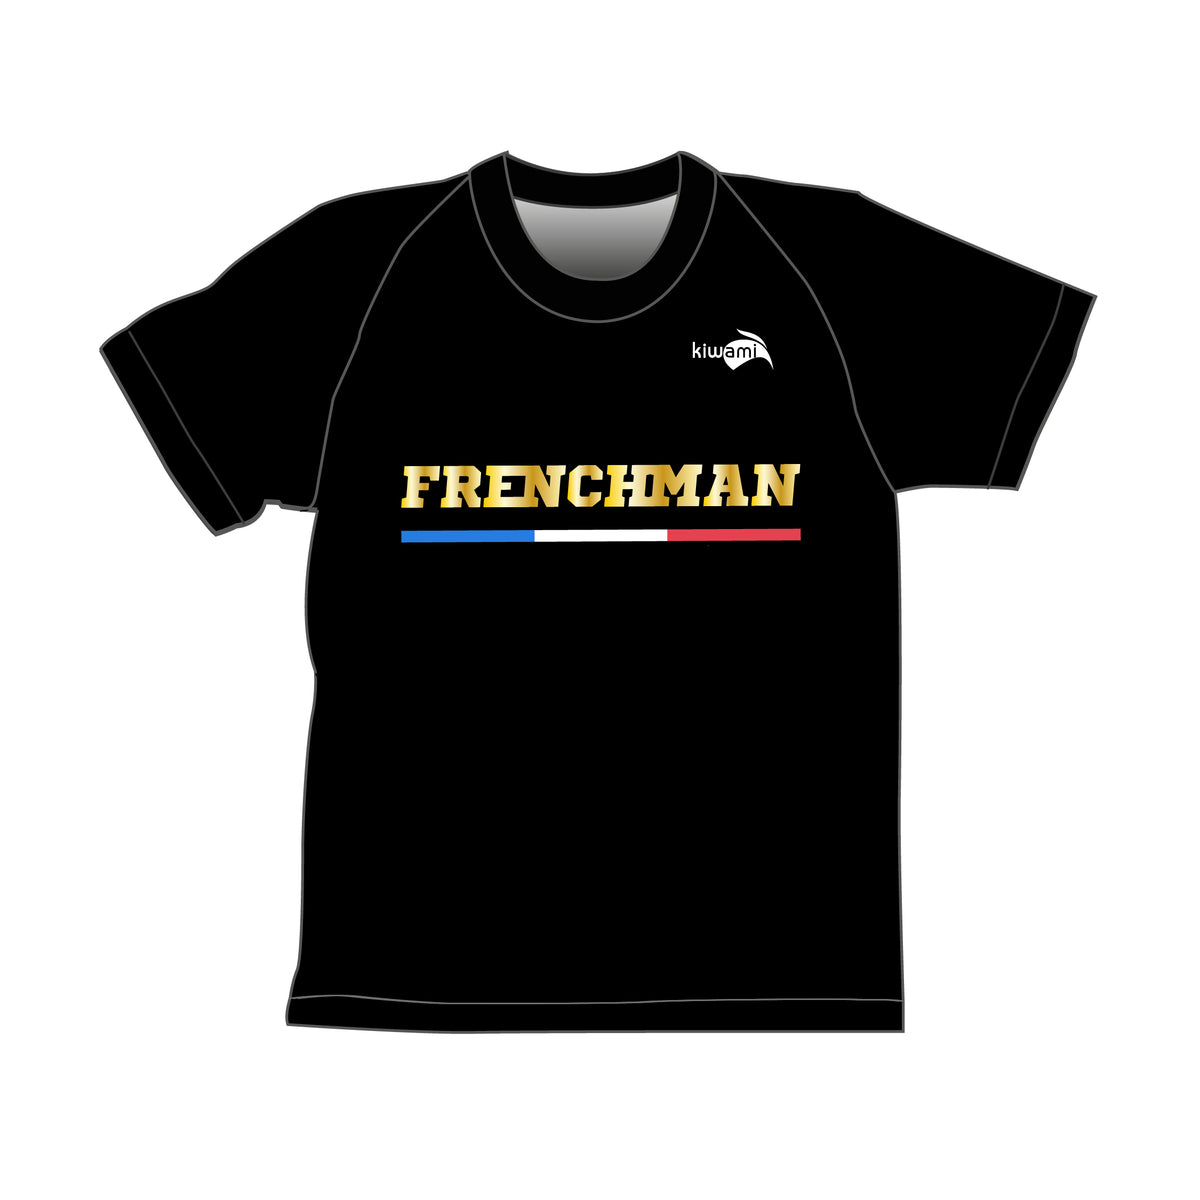 Tee-shirt running femme Frenchman triathlon Carcan boutique officielle - kiwami sports fabrication française